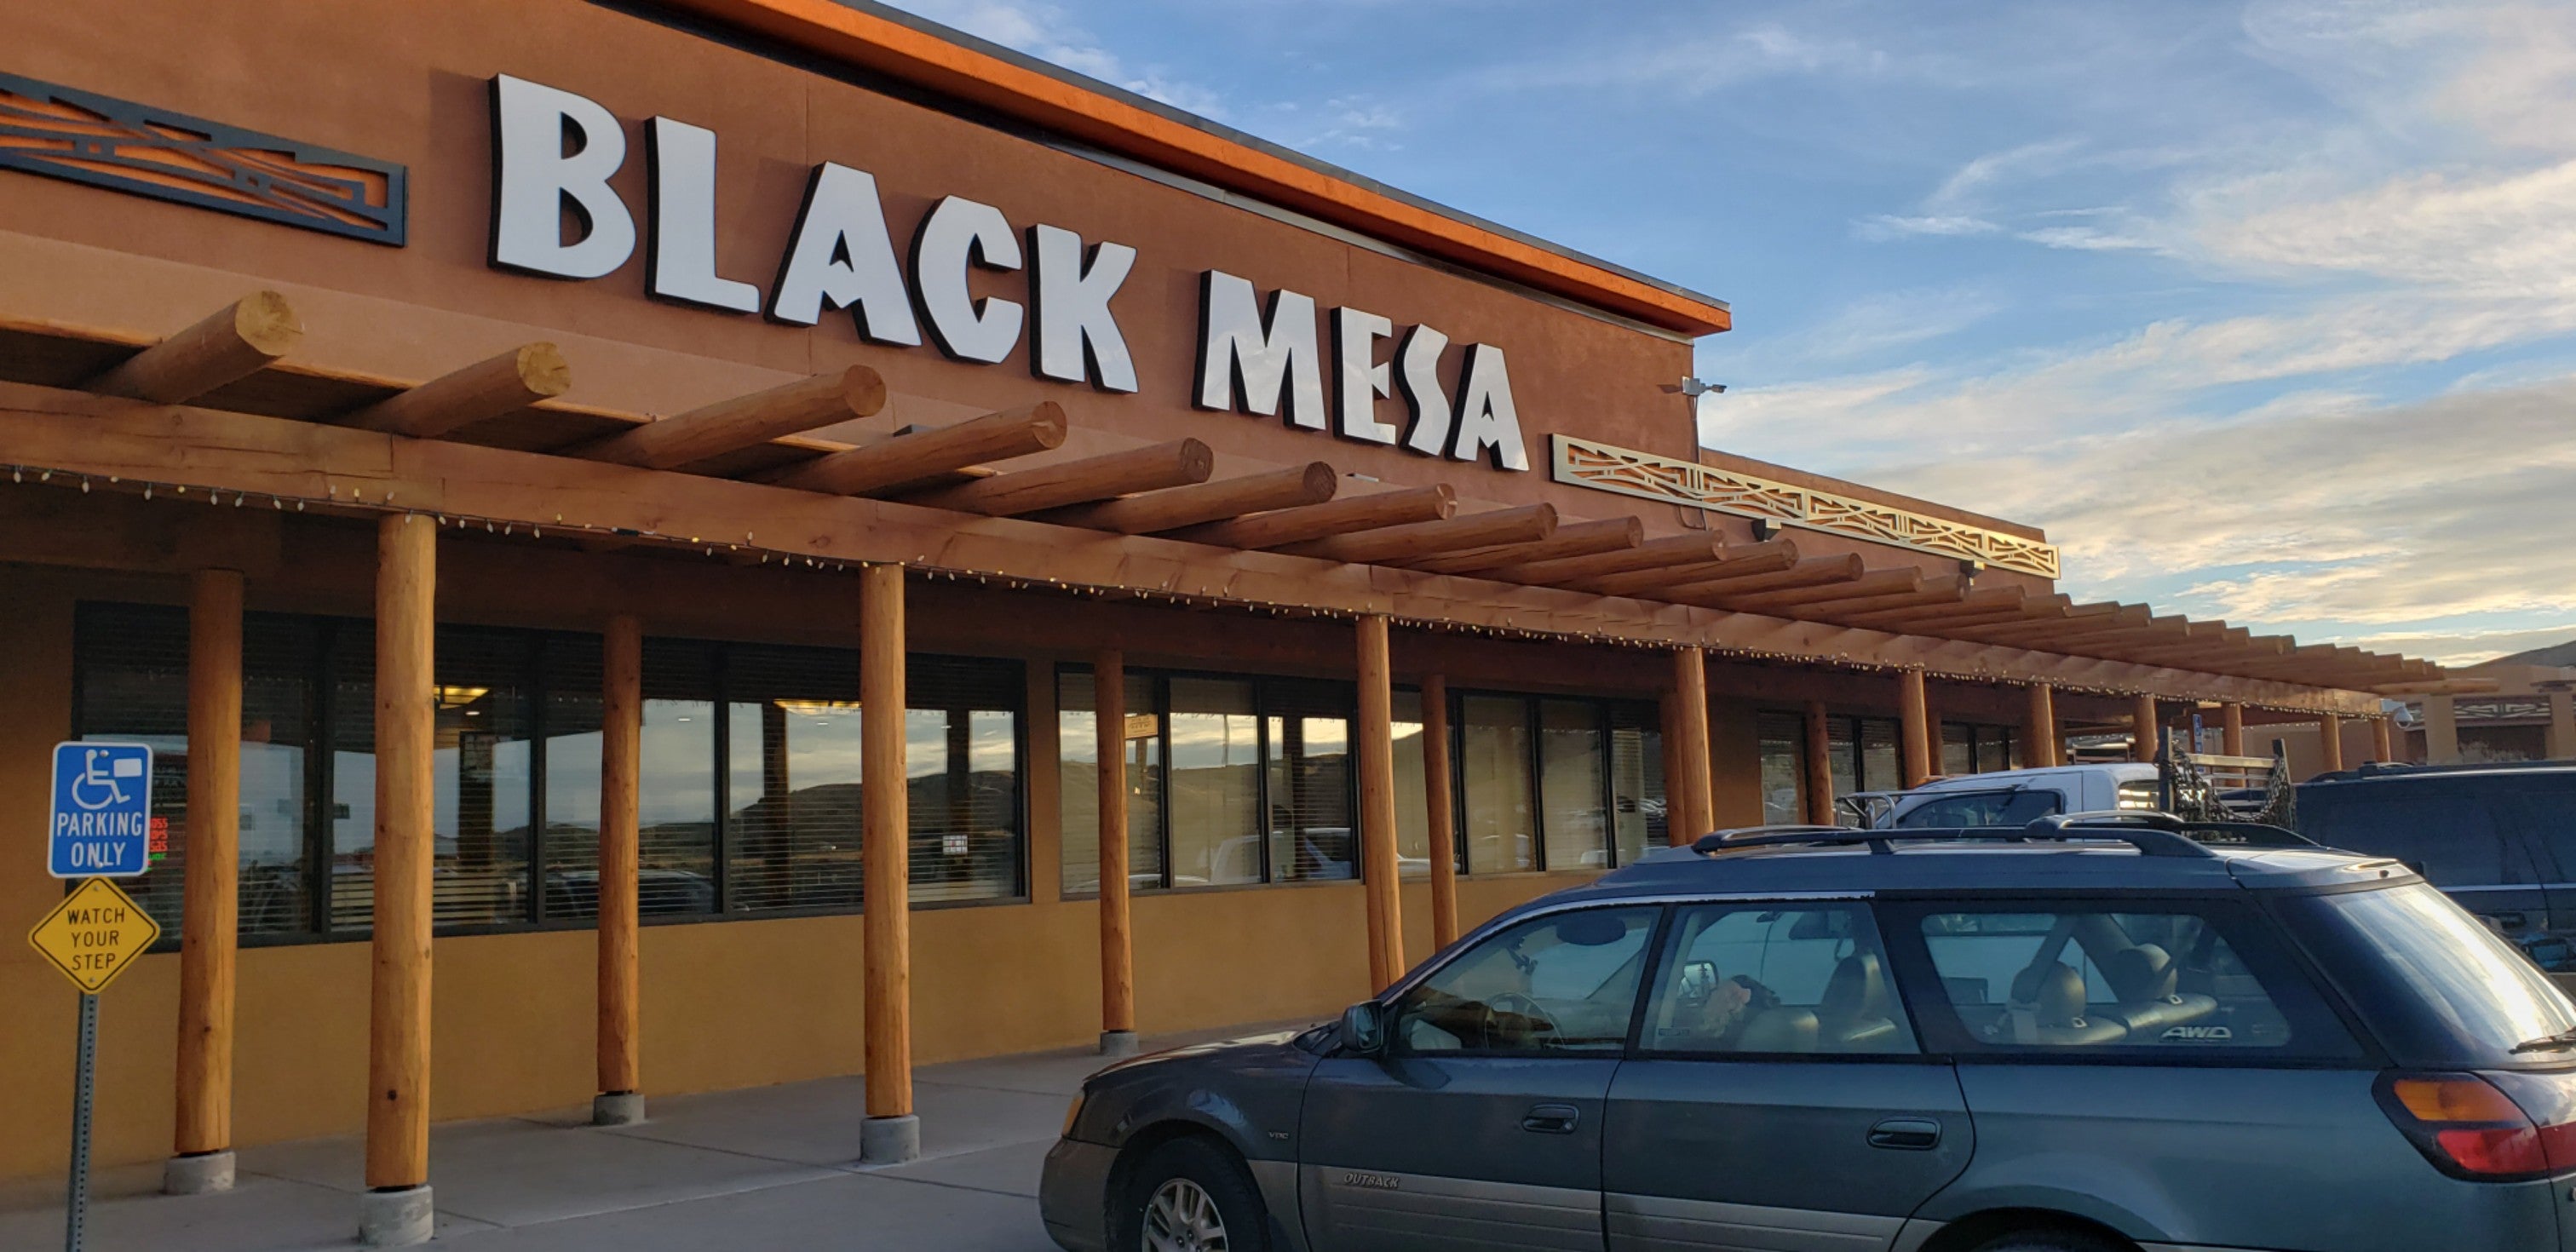 Black Mesa travel shop: gasoline, showers, food, etc.